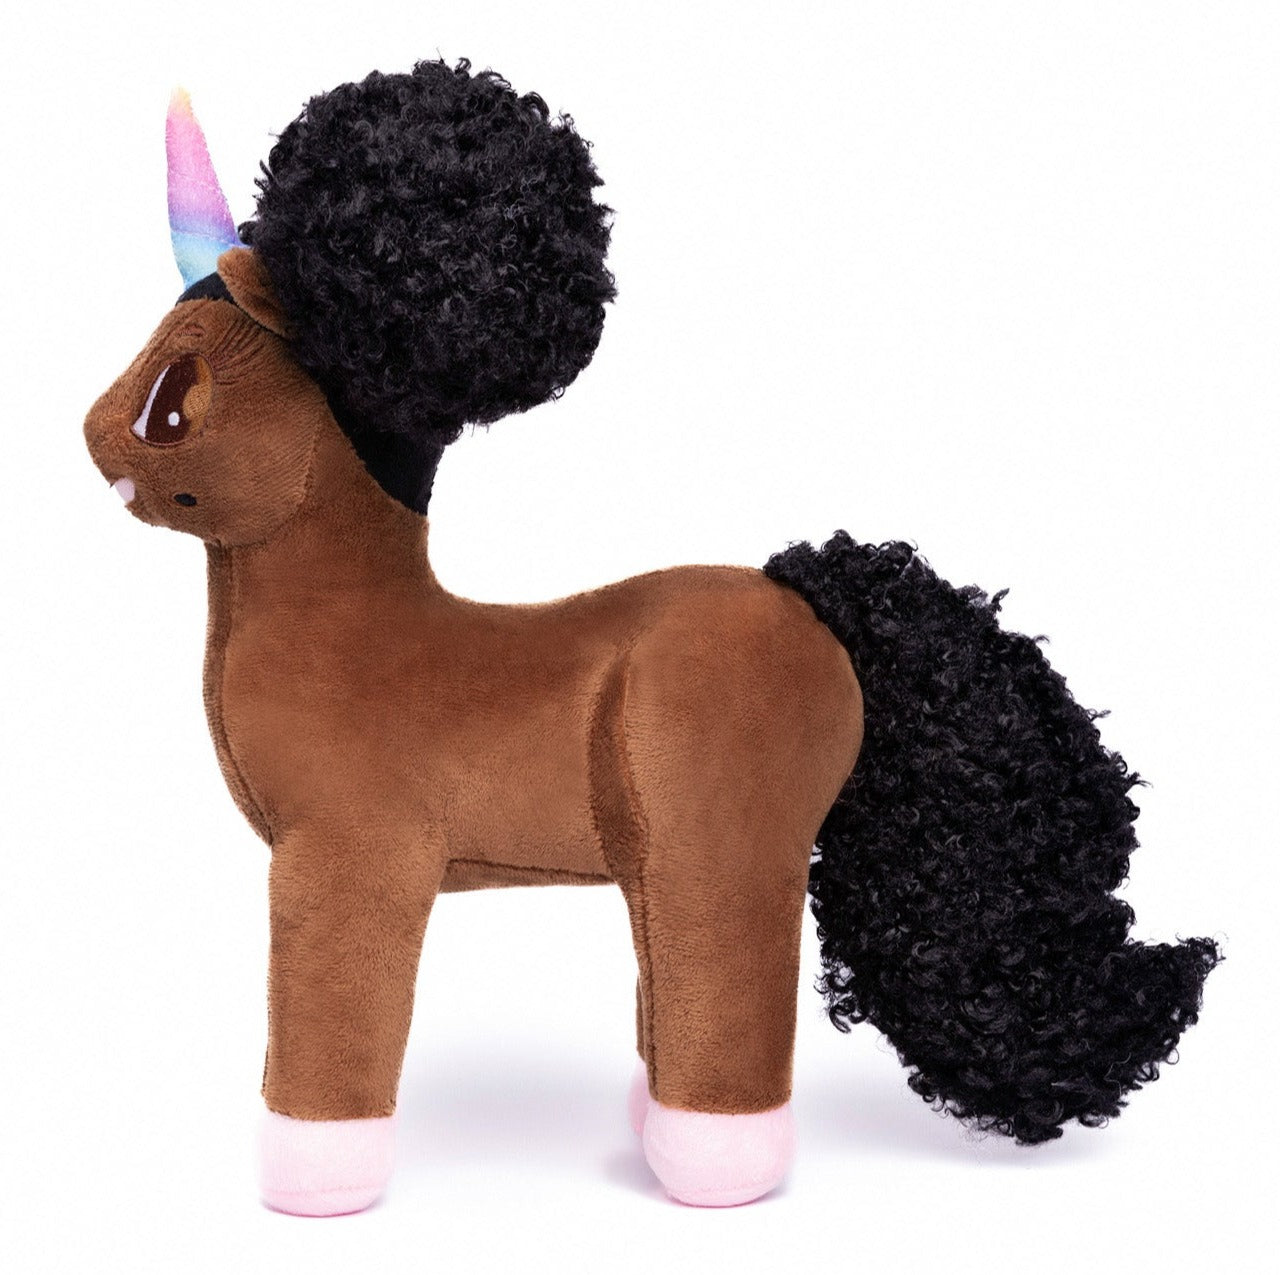 Armani Black Unicorn Plush Toy - 12 inch